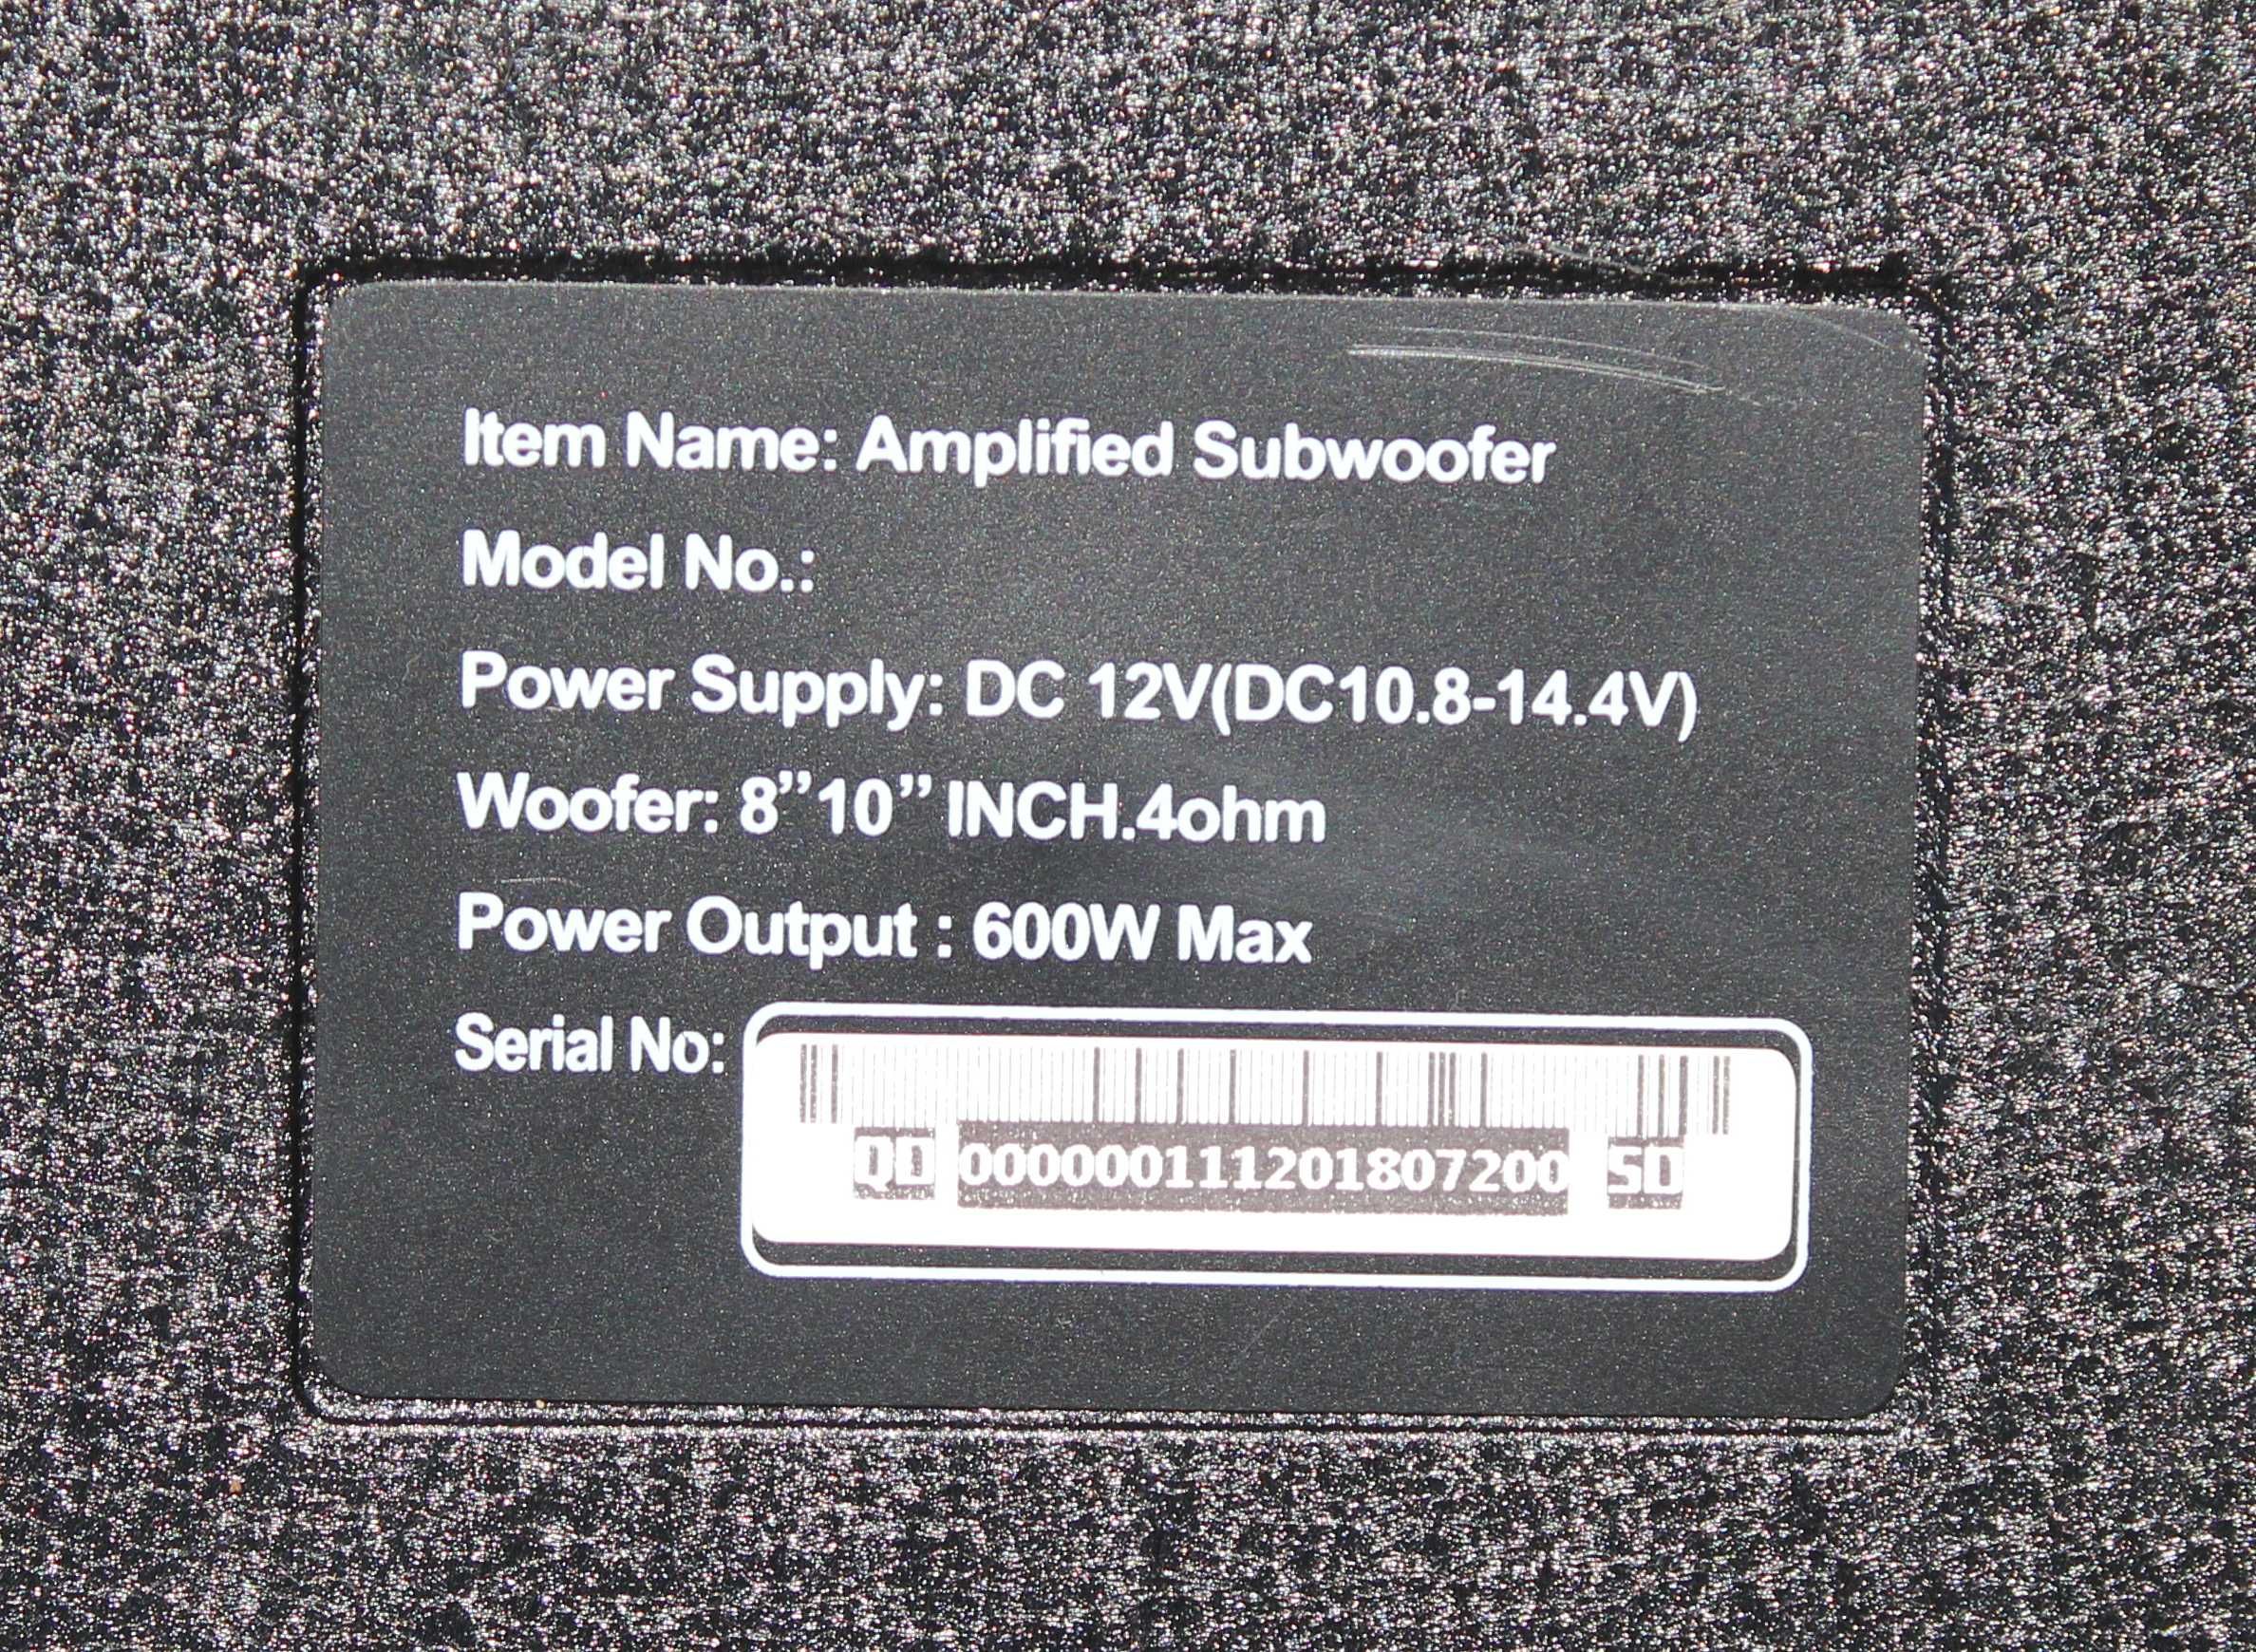 Автомобильный сабвуфер Kuerl Amplified Subwoofer 8"10"inch.4ohm 600w